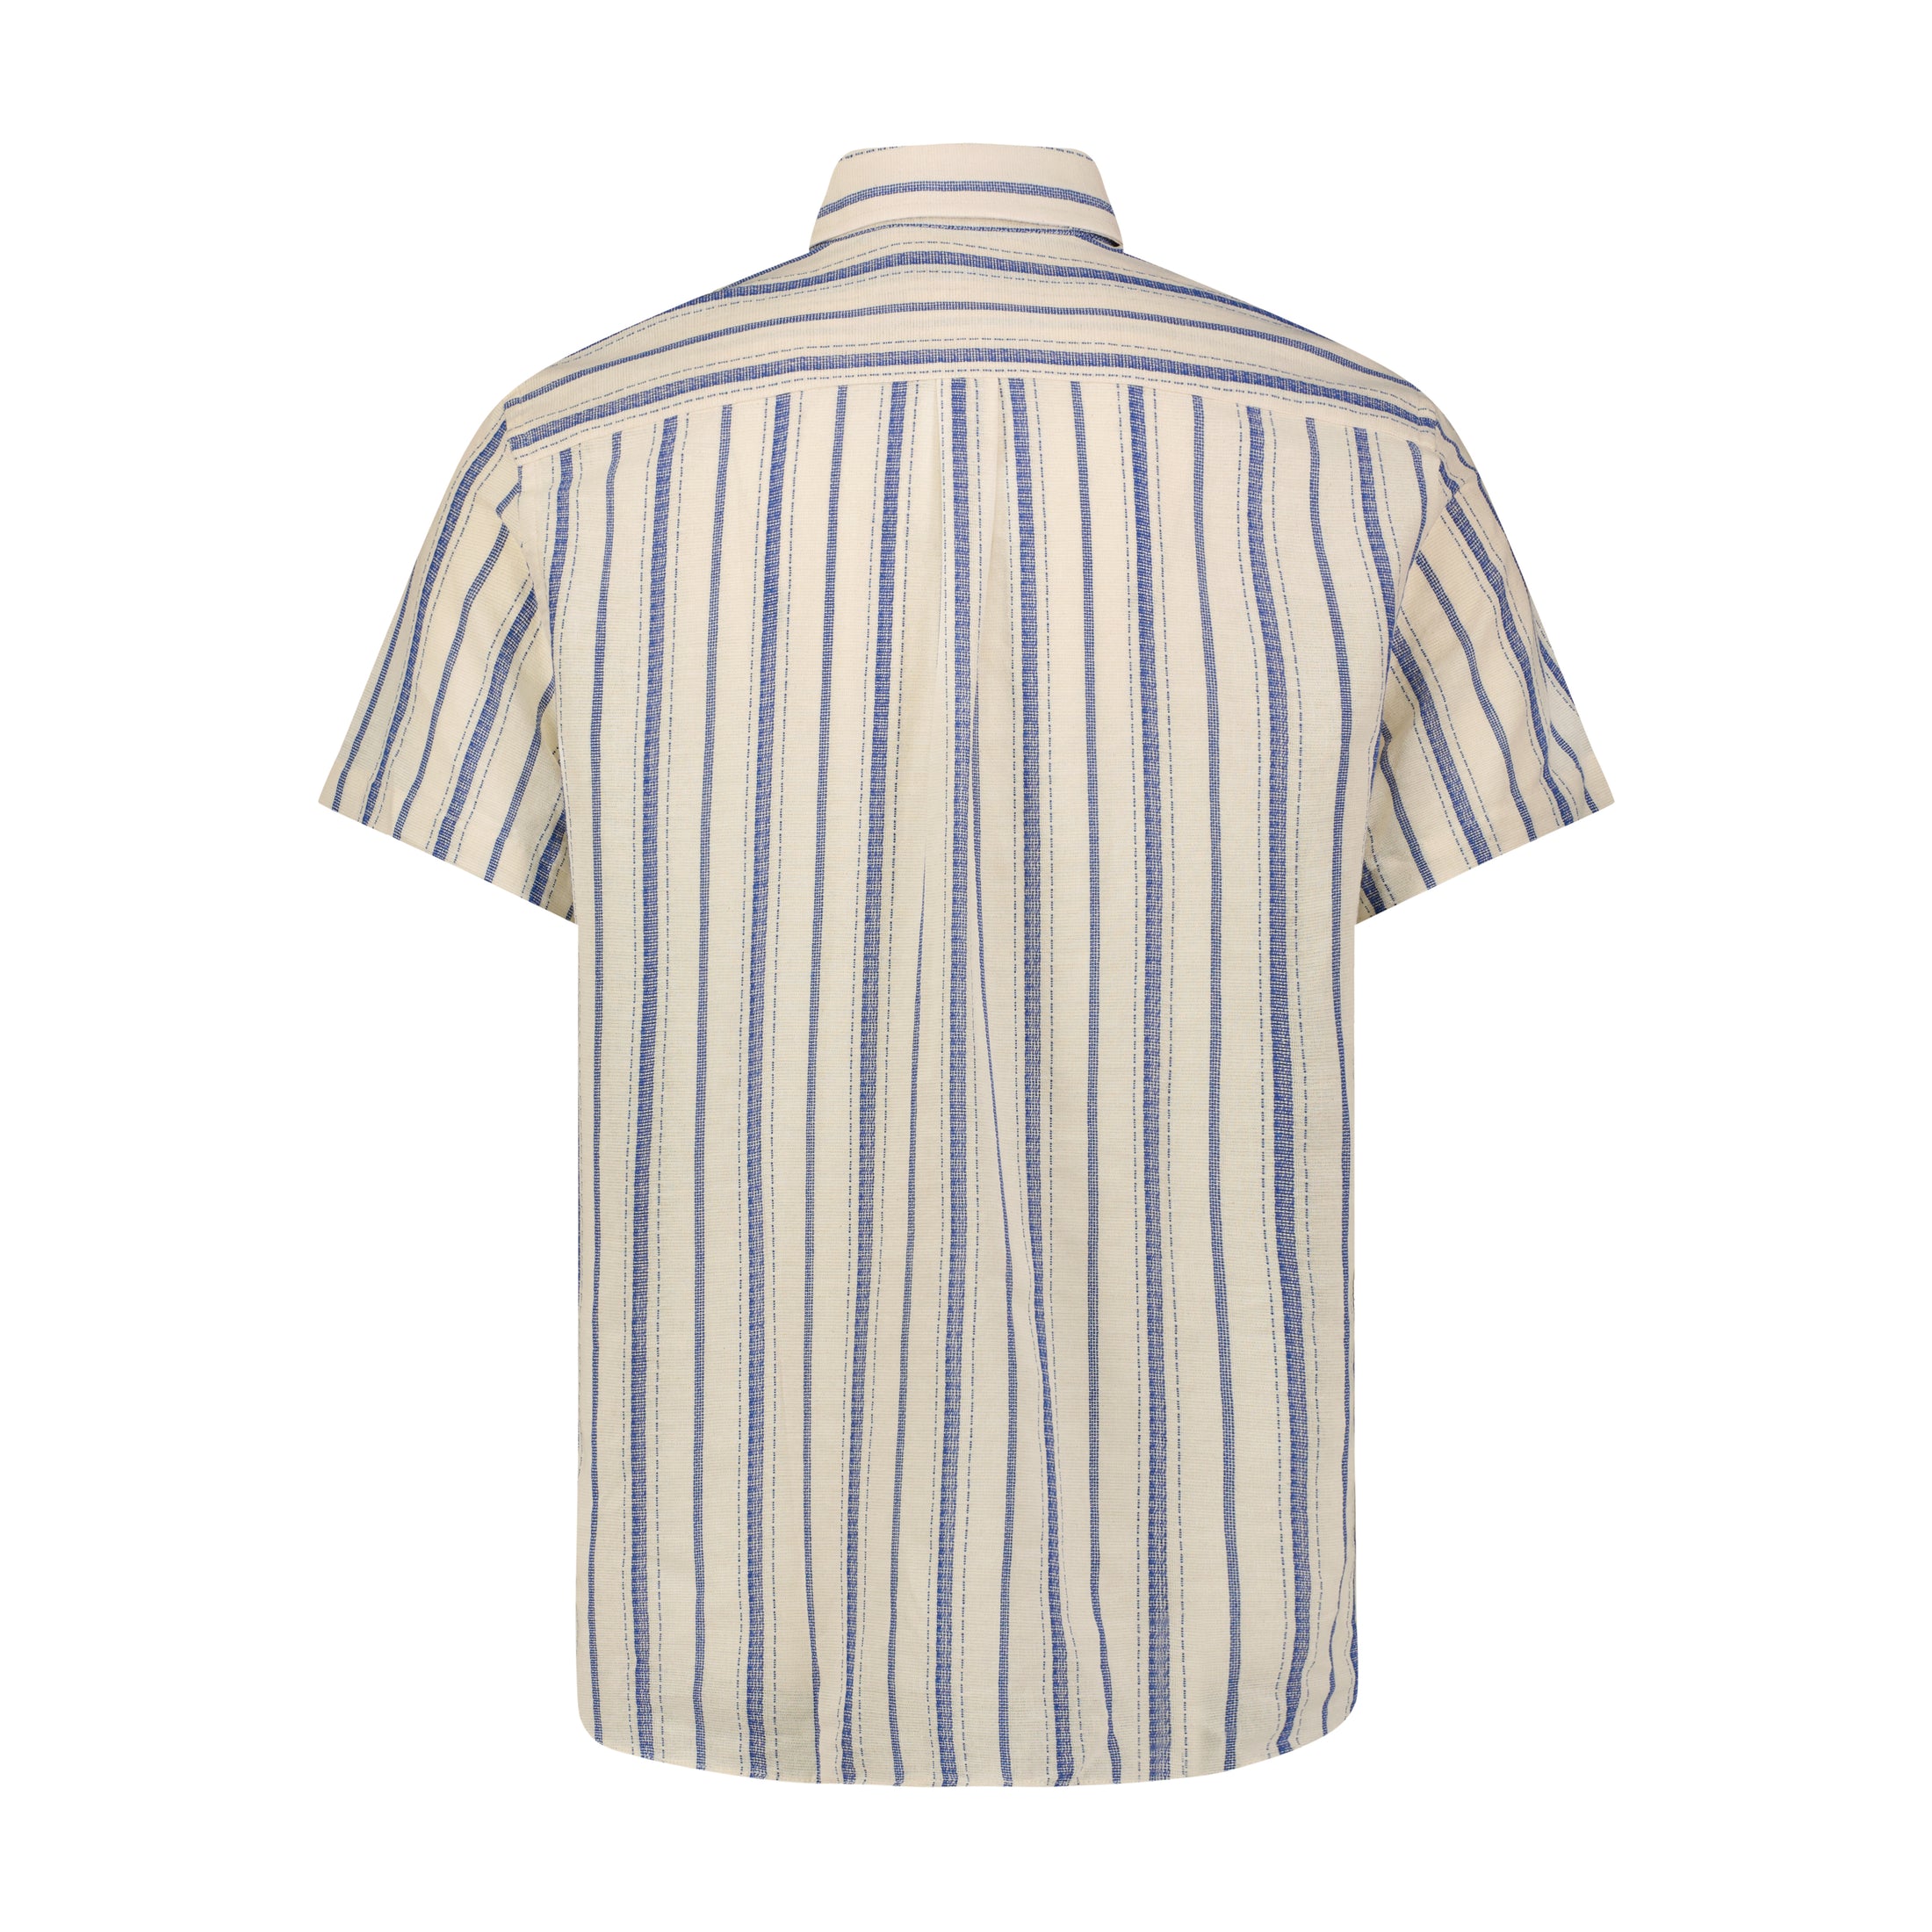 Denim Blue with Beige Striped Short Sleeve Shirt